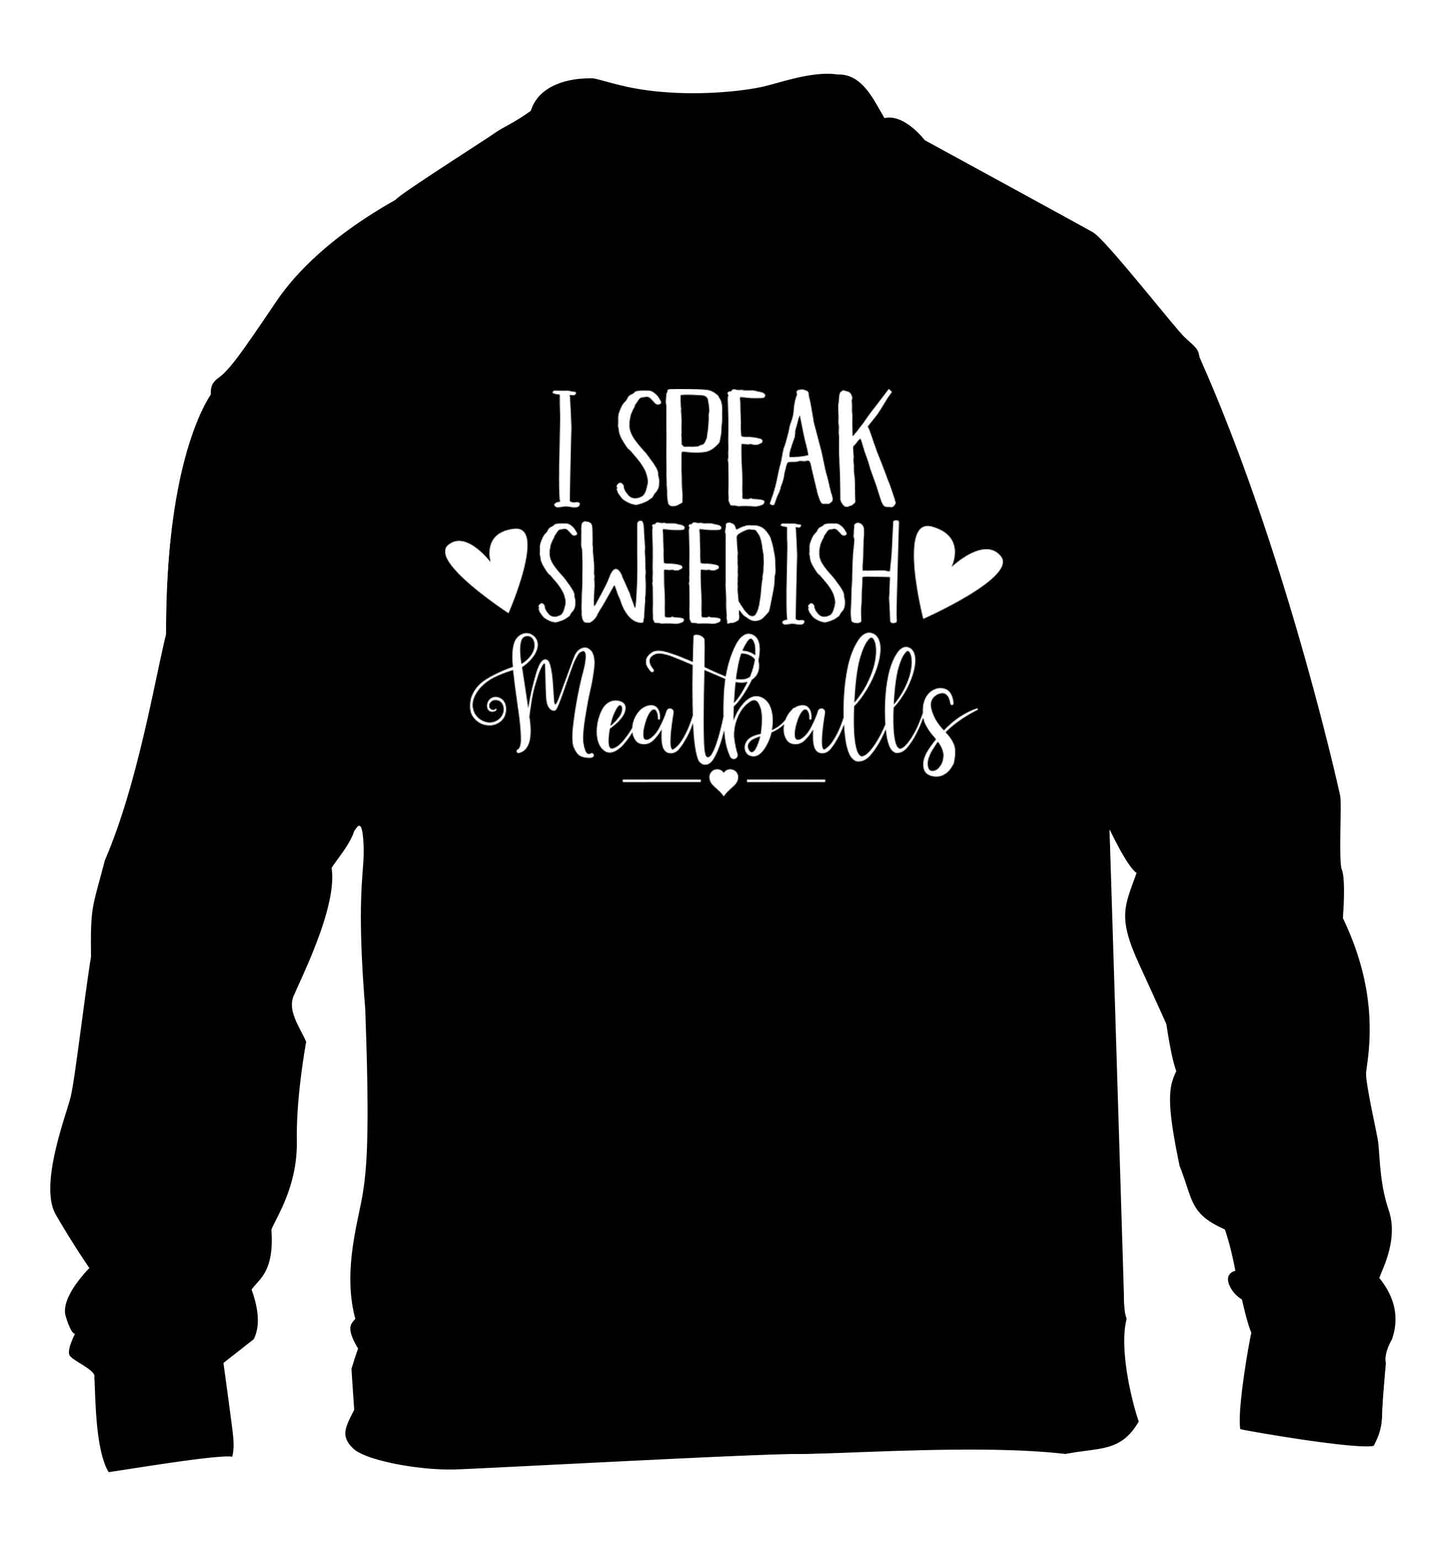 I speak sweedish...meatballs children's black sweater 12-13 Years